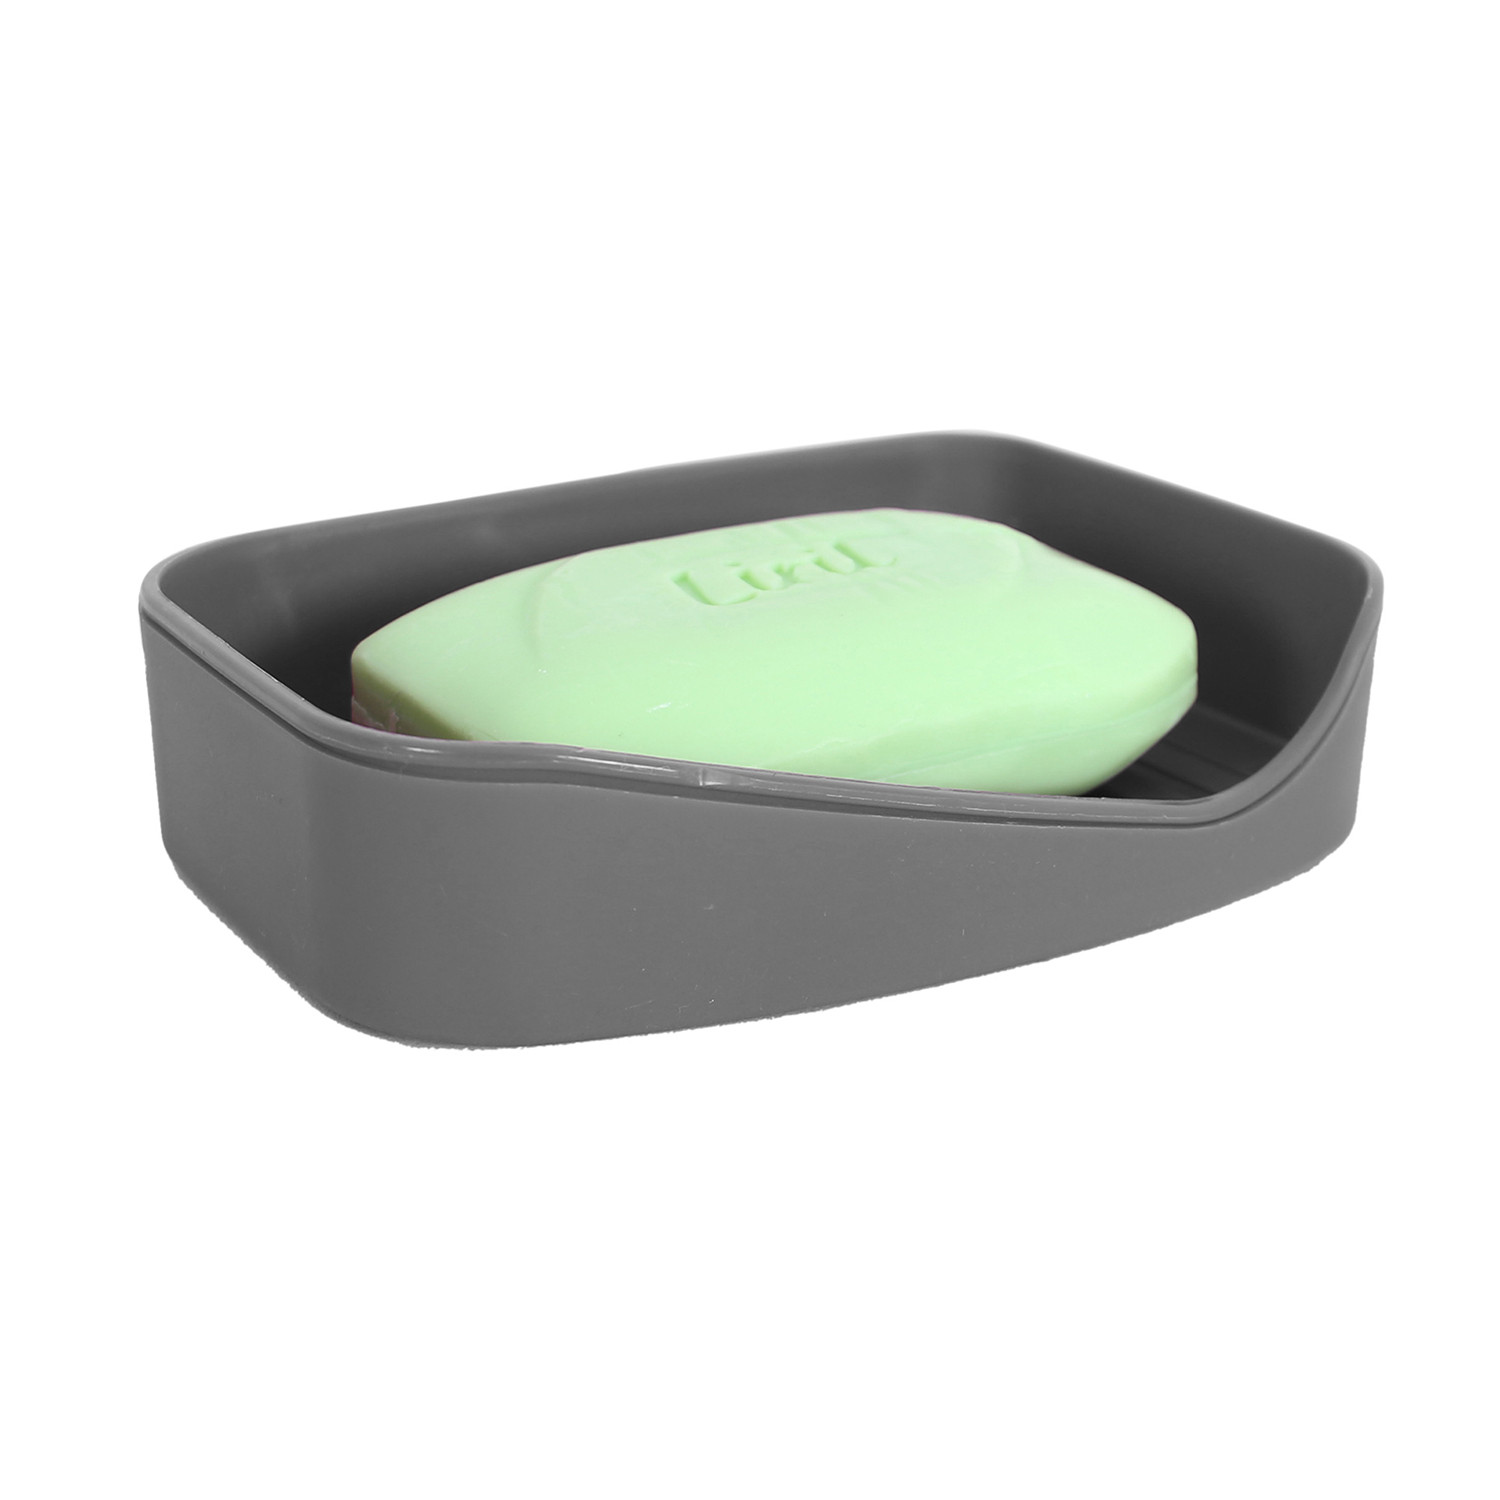 Kuber Industries Saop Holder For Kitchen Sink|Portable Plastic Double Desk Self Draining Soap Holder|Soap Holder For Kitchen Bathroom,Wash Basin| (Gray)